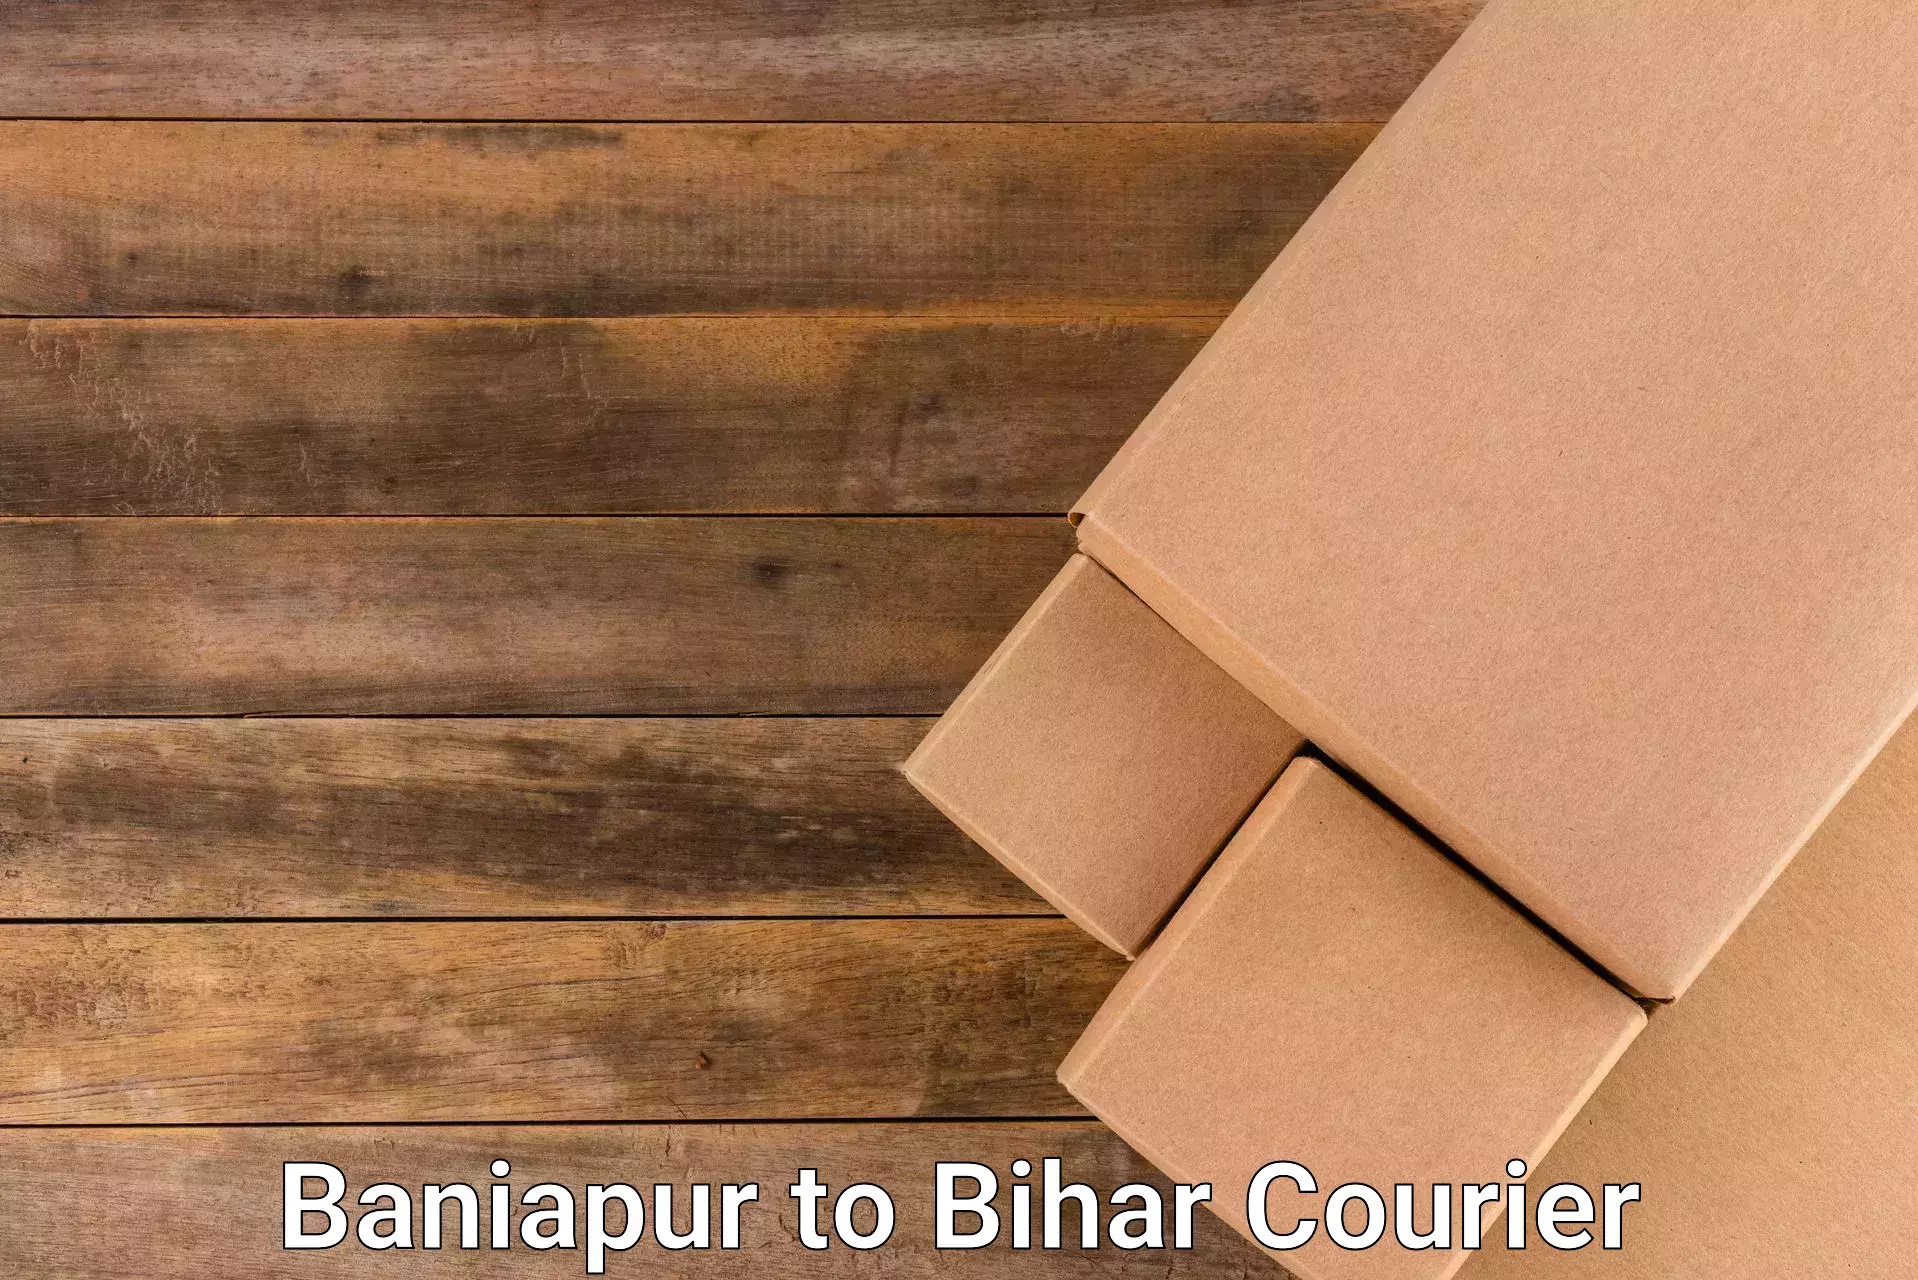 User-friendly courier app Baniapur to Motihari